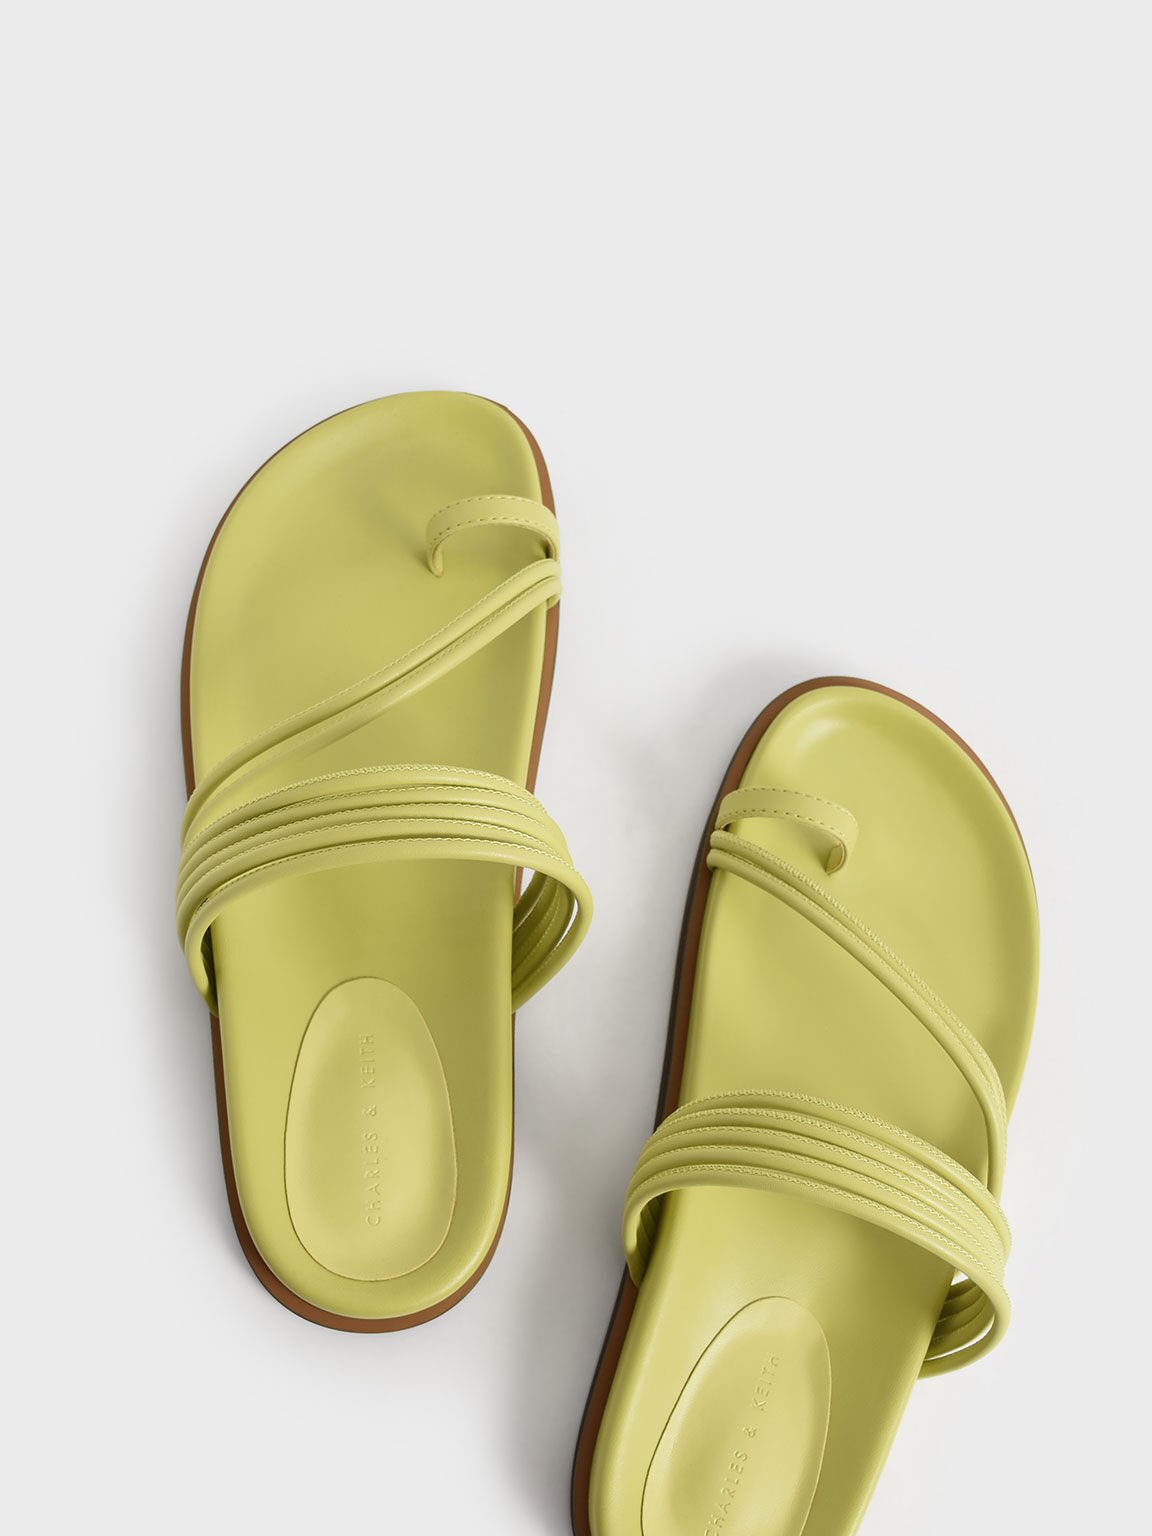 Toe Loop Strappy Flat Sandals, Lime, hi-res